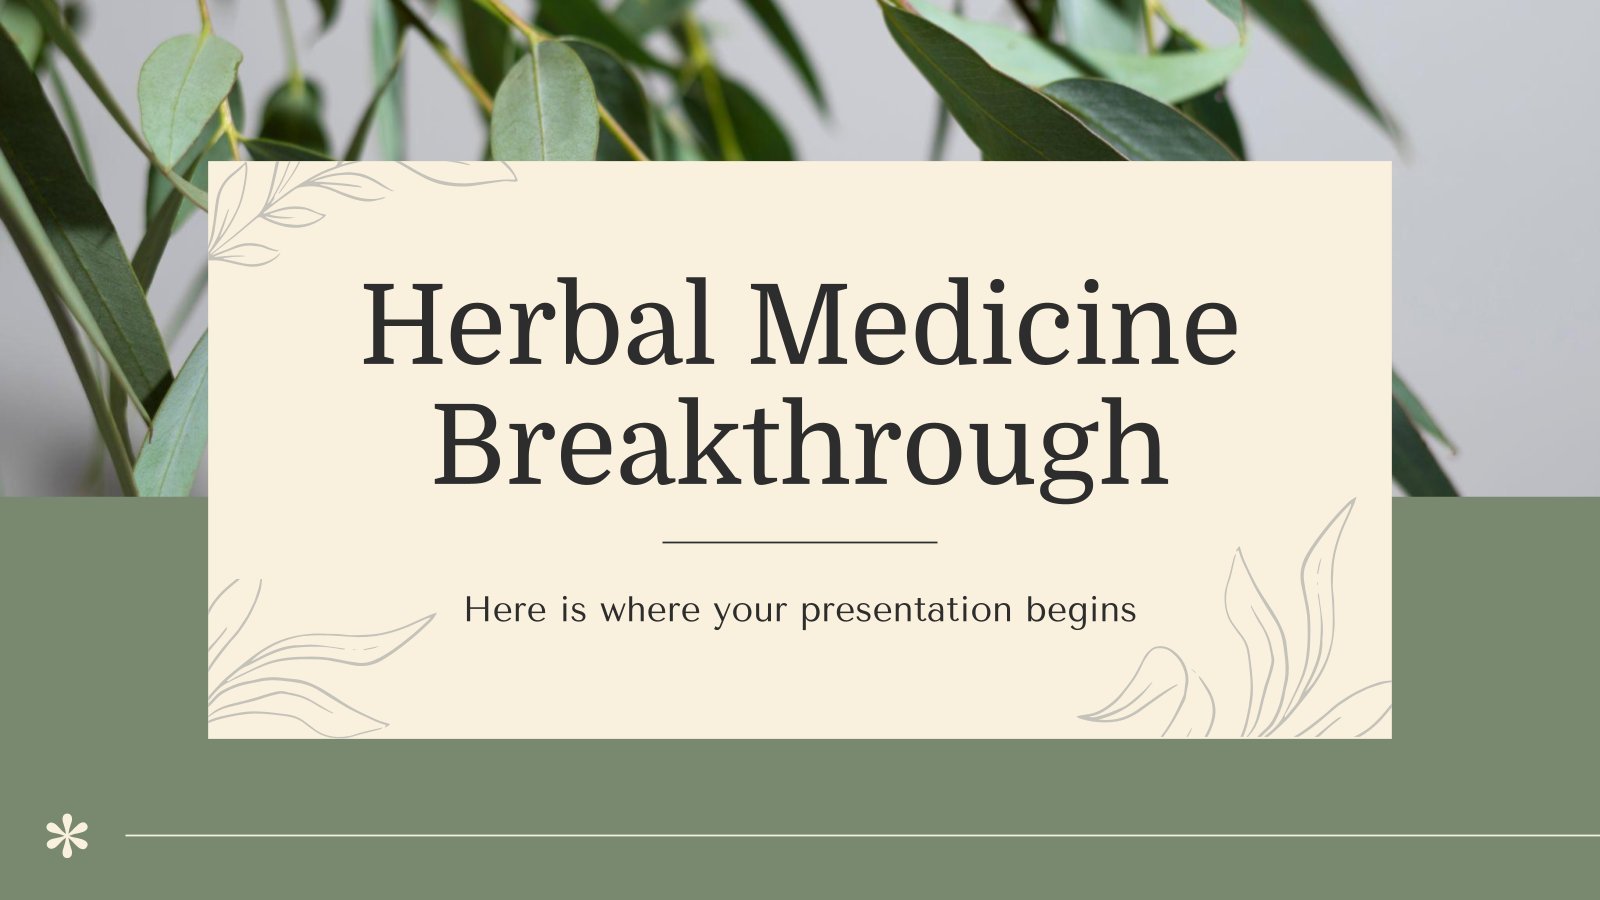 Herbal Medicine Breakthrough. Google Slides and PowerPoint